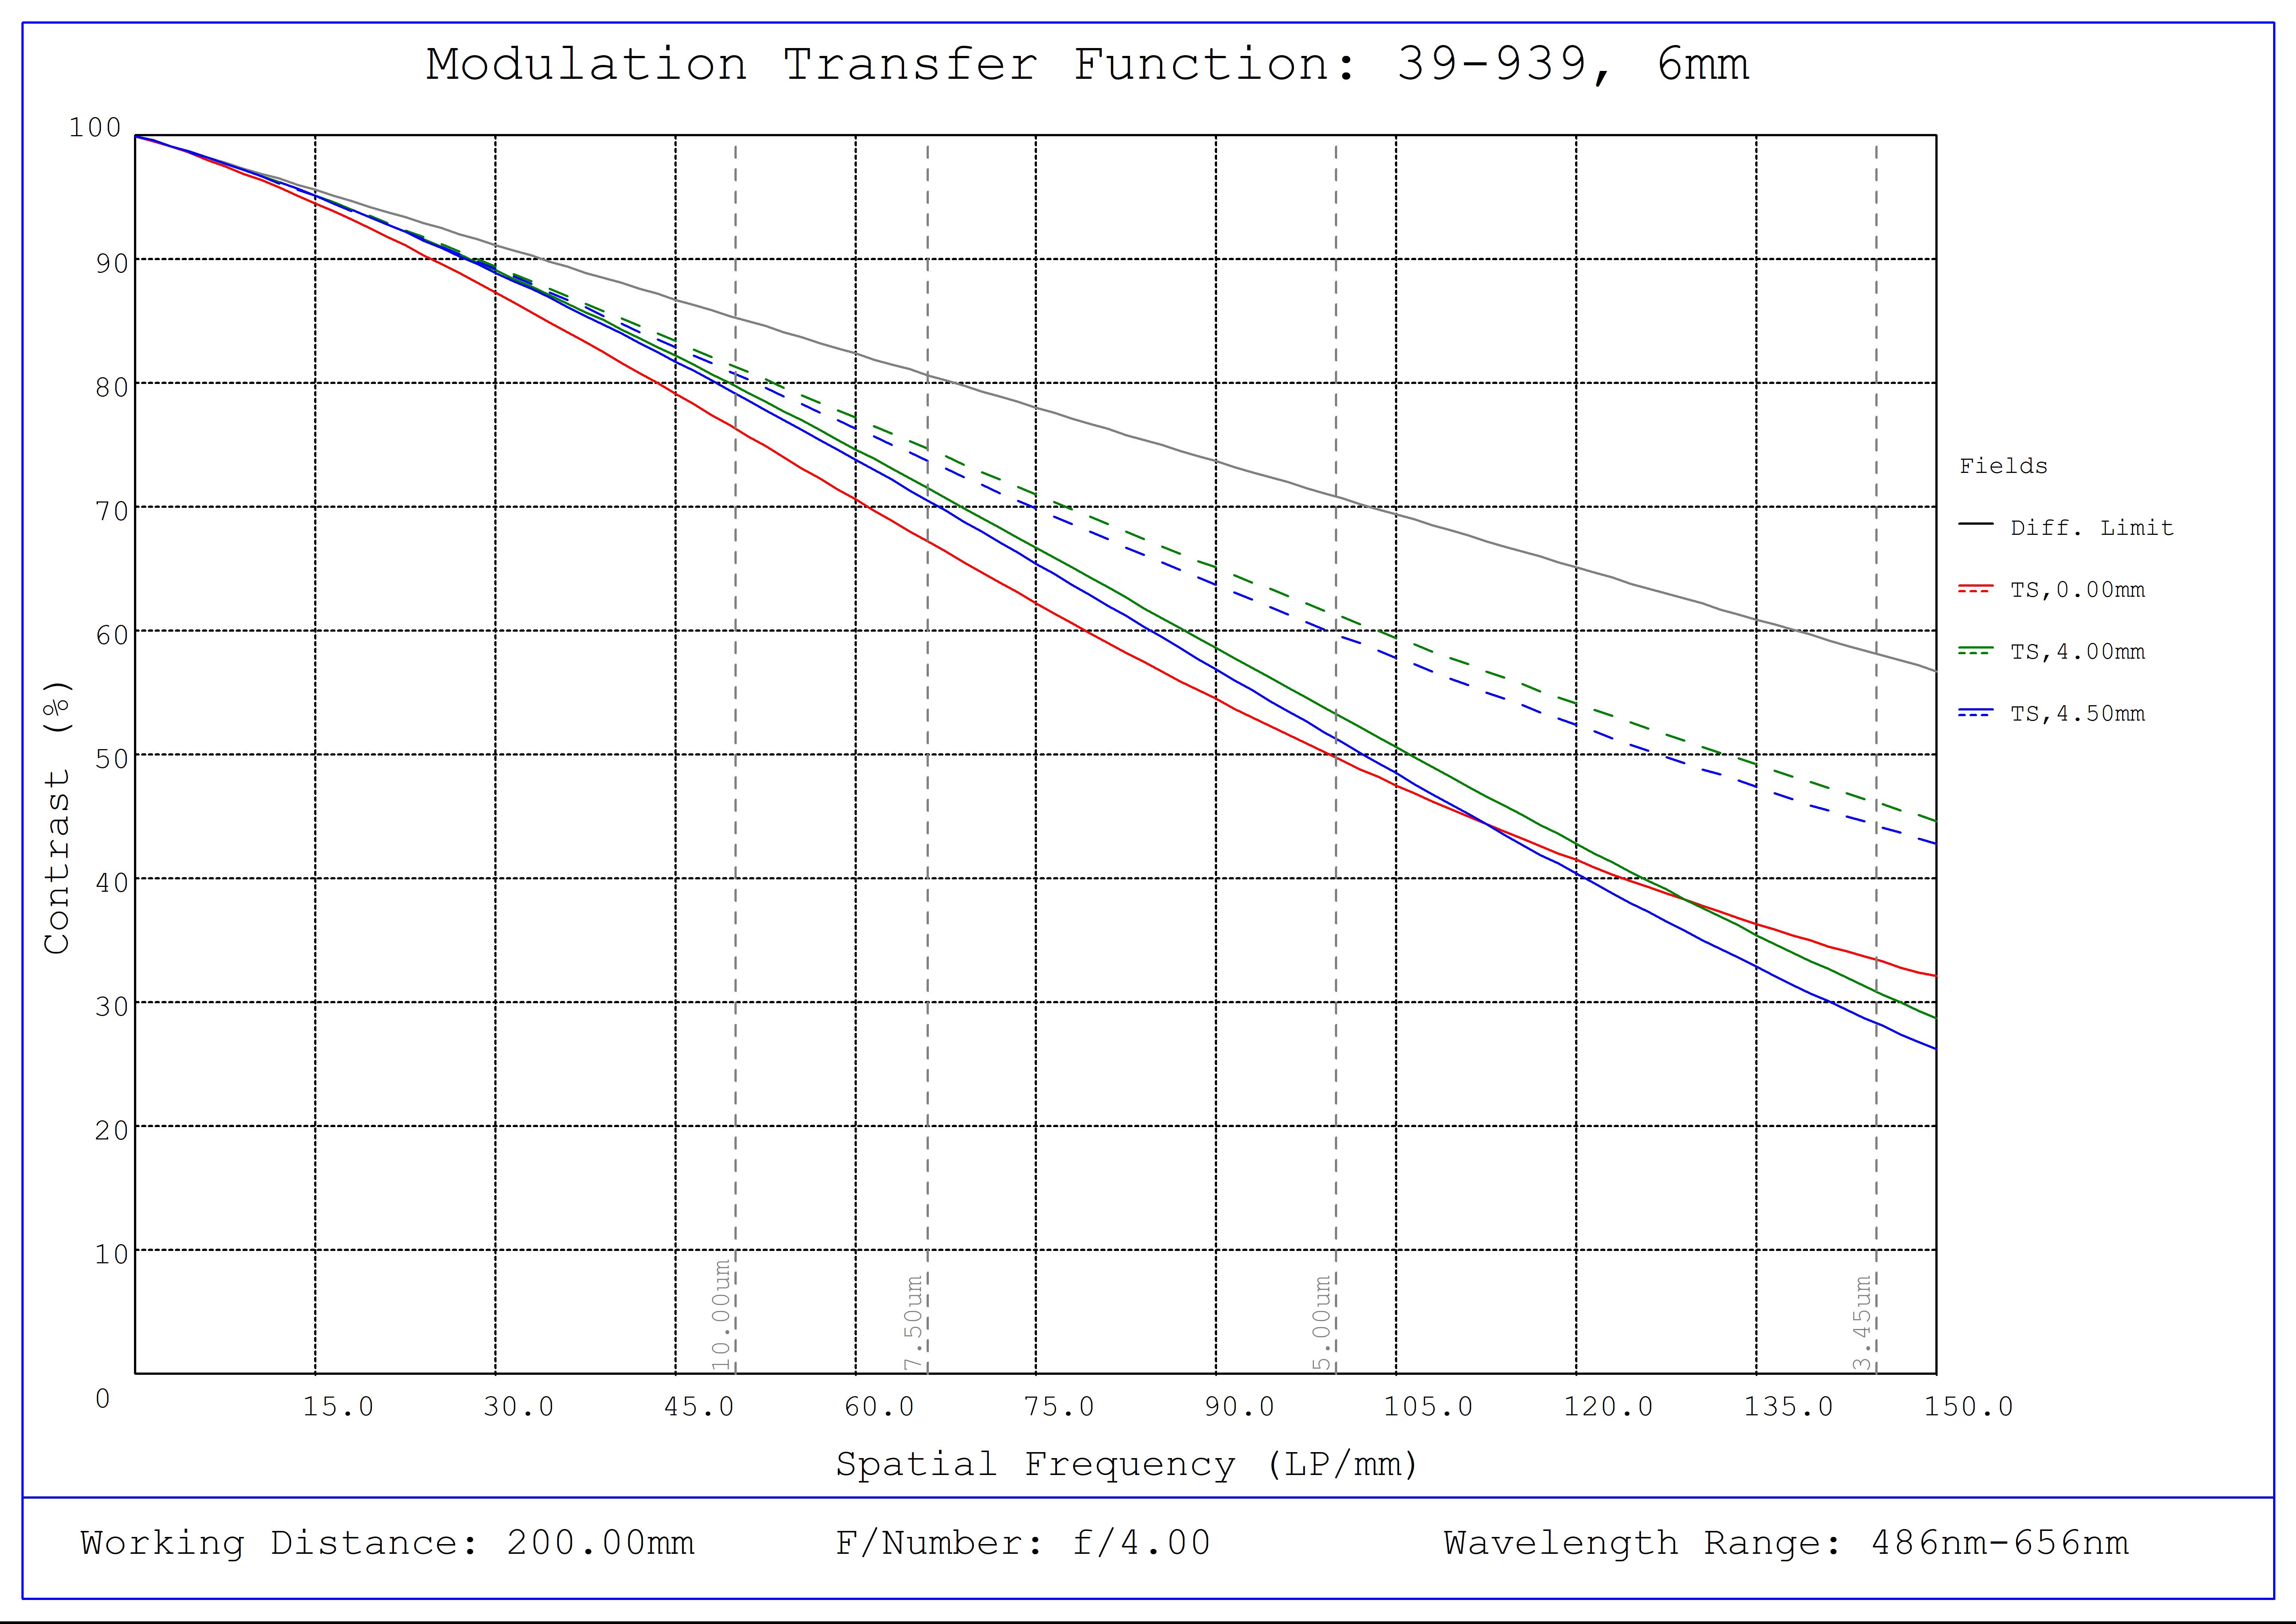 #39-939, 6mm C VIS-NIR Series Fixed Focal Length Lens, Modulated Transfer Function (MTF) Plot, 200mm Working Distance, f4